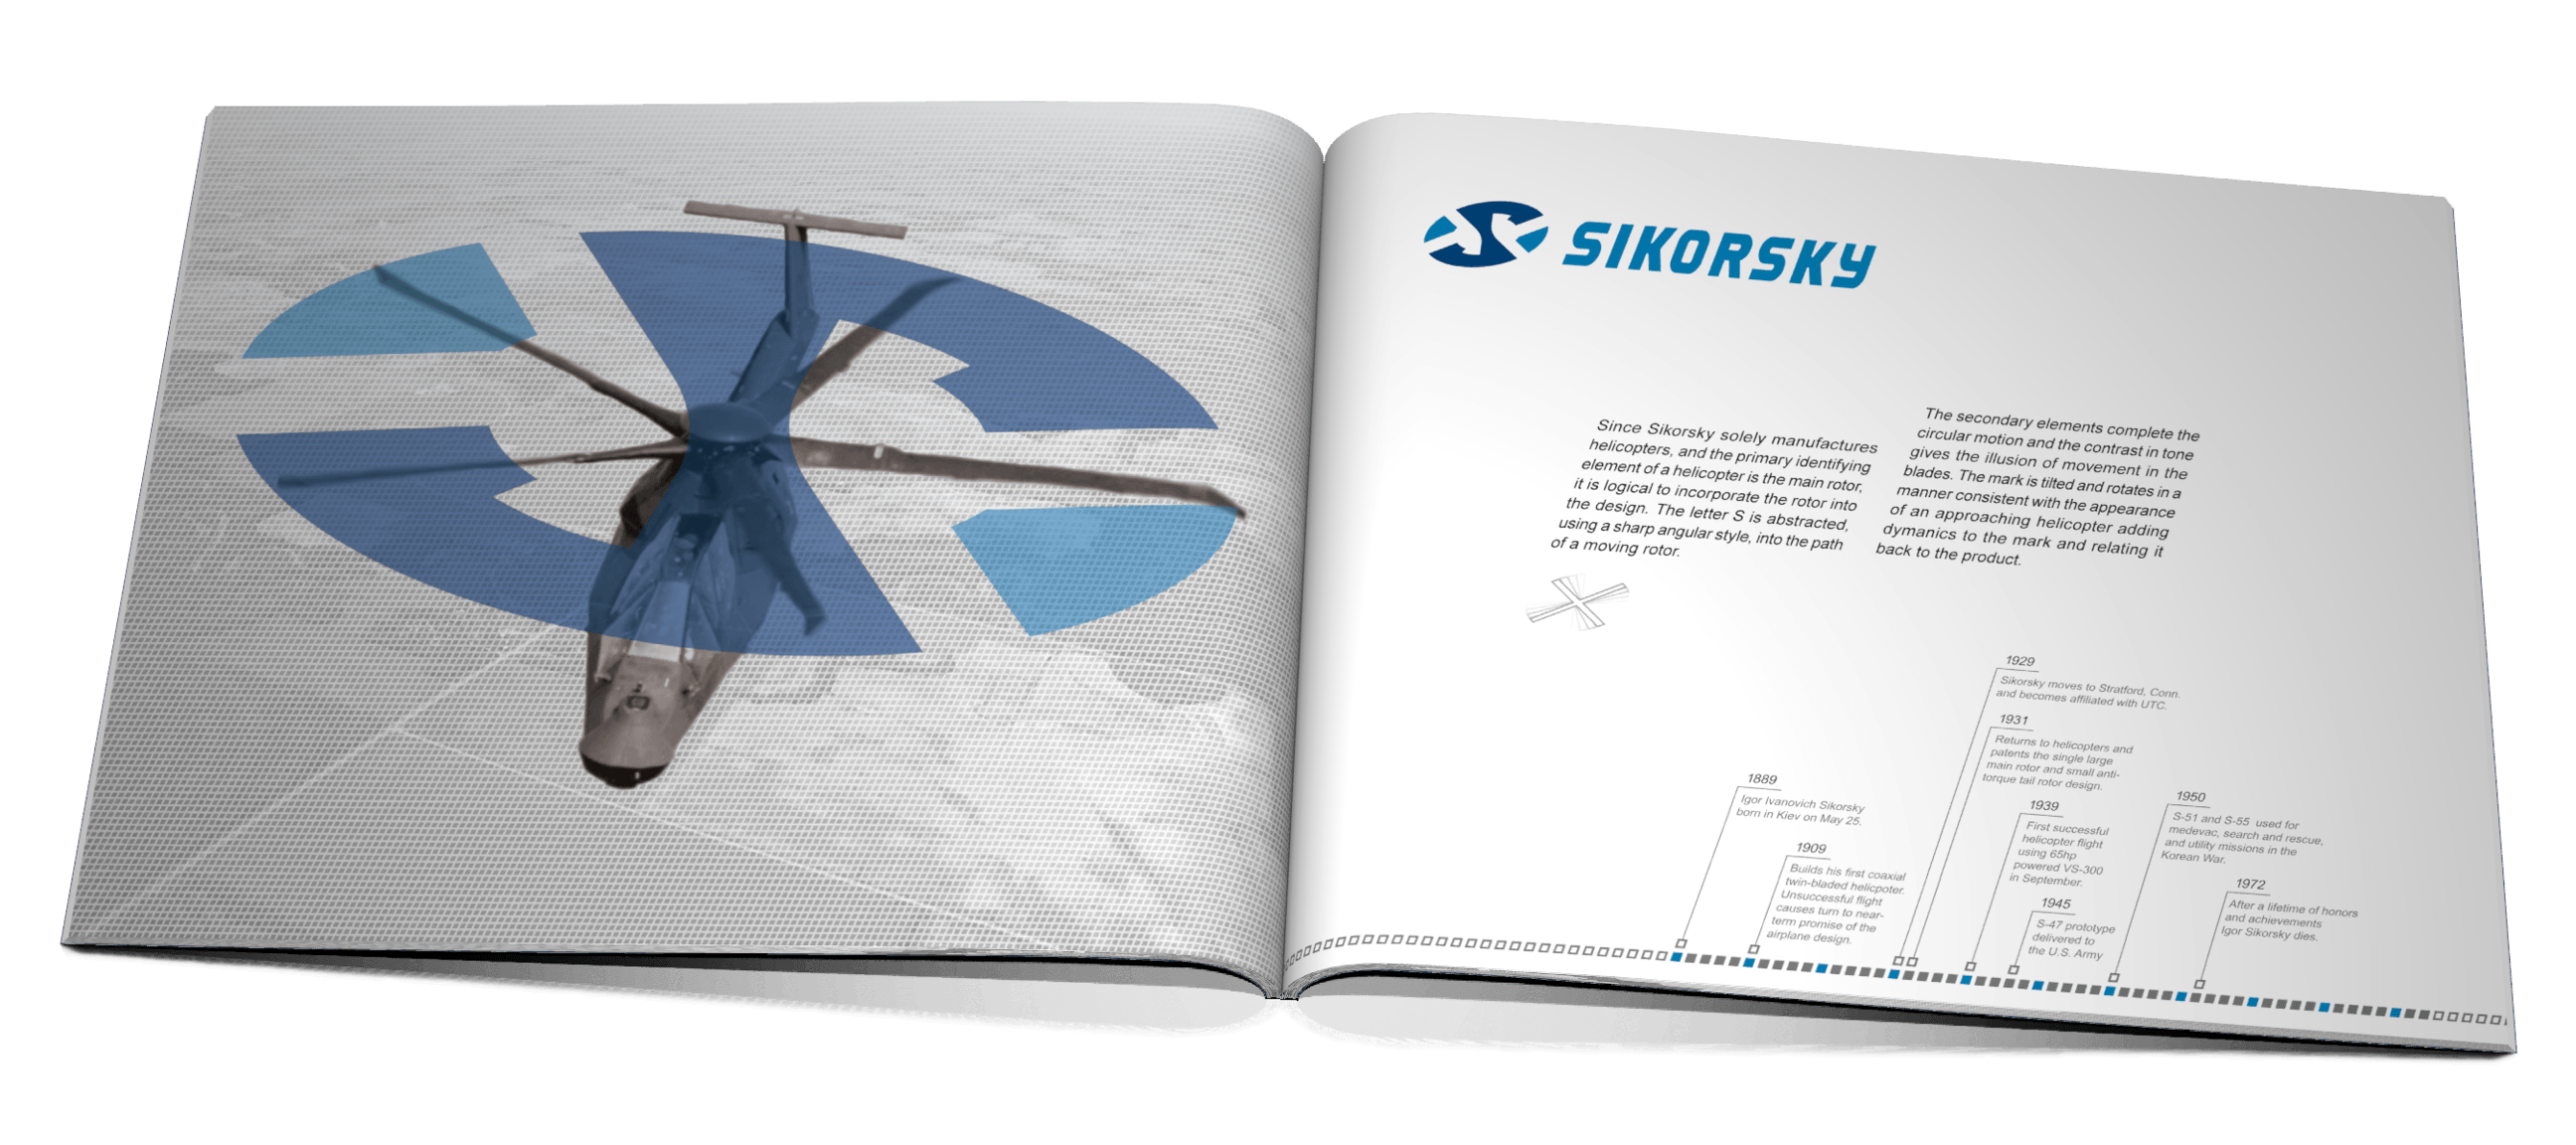 Sikorsky Logo - United Technologies Corporation (UTC) Identity Design | Coda Moda